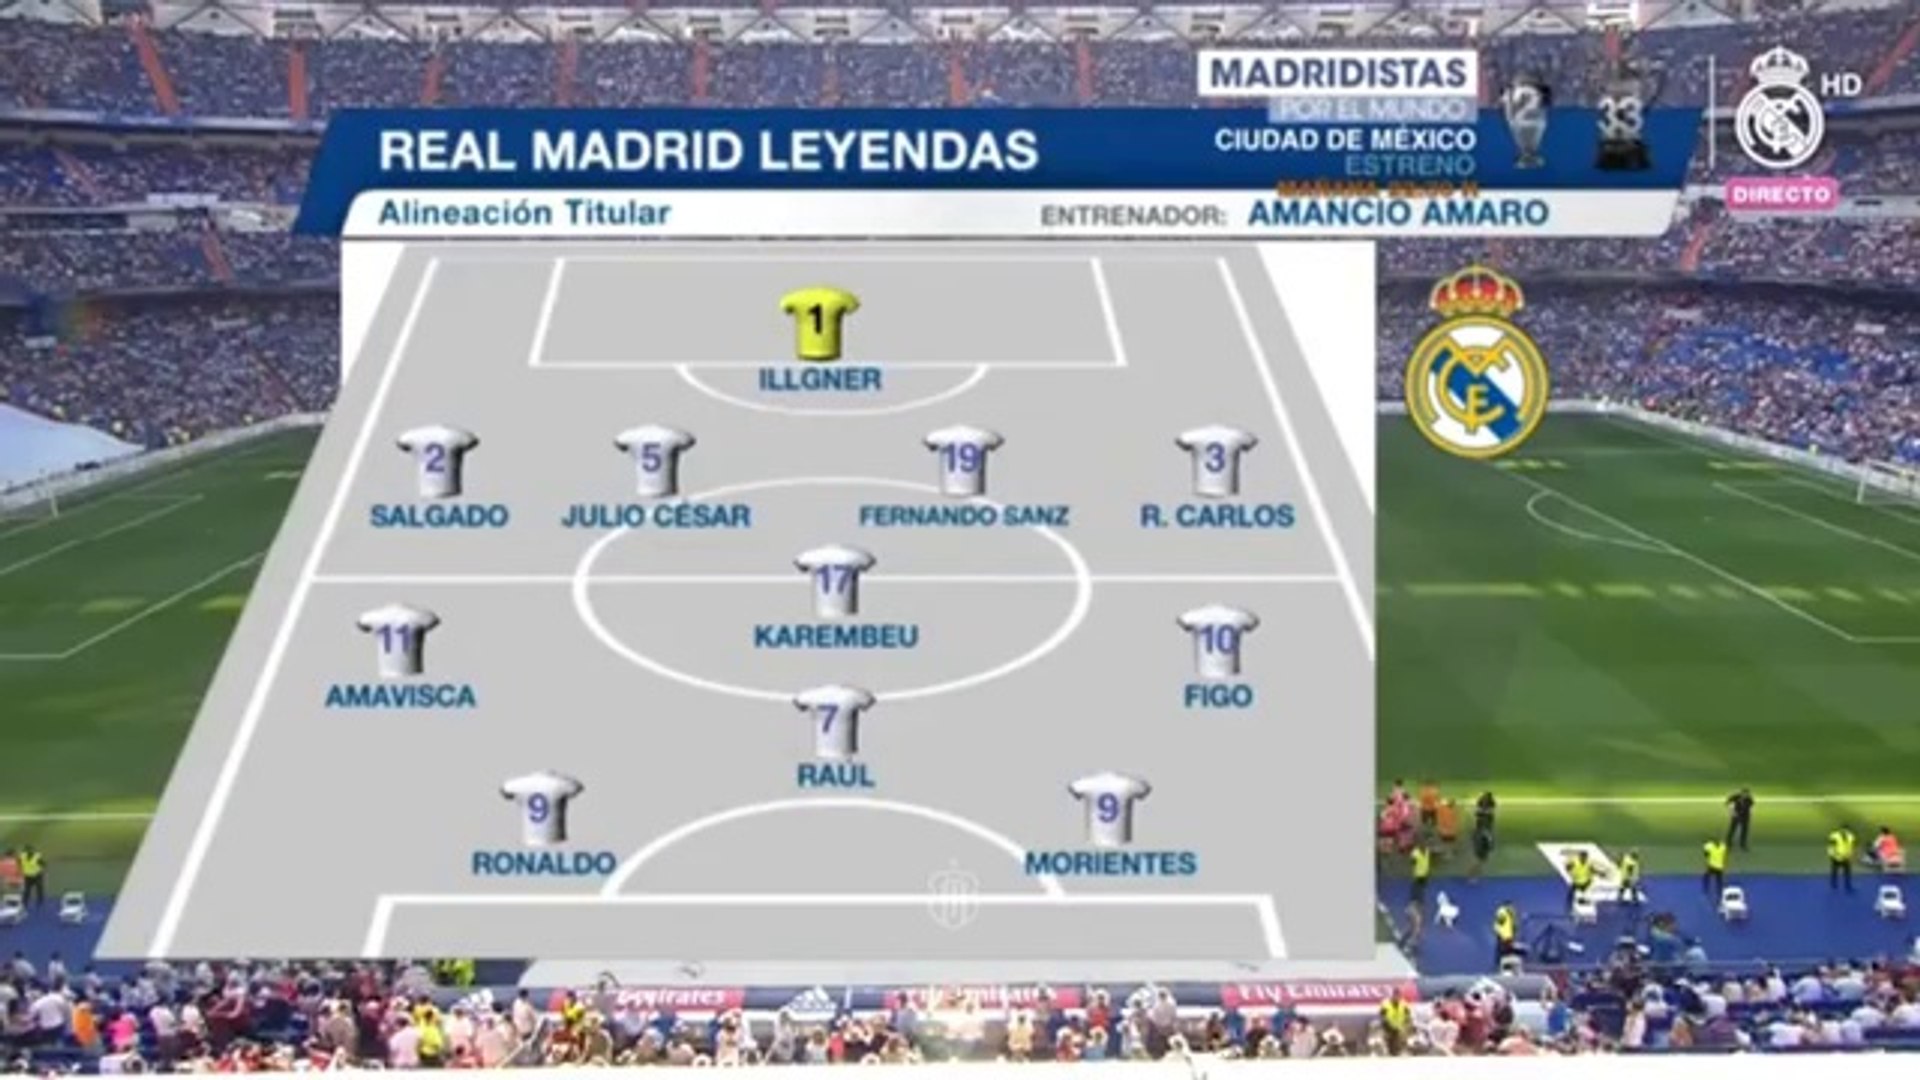 Real barcelona match legends vs madrid Real Madrid